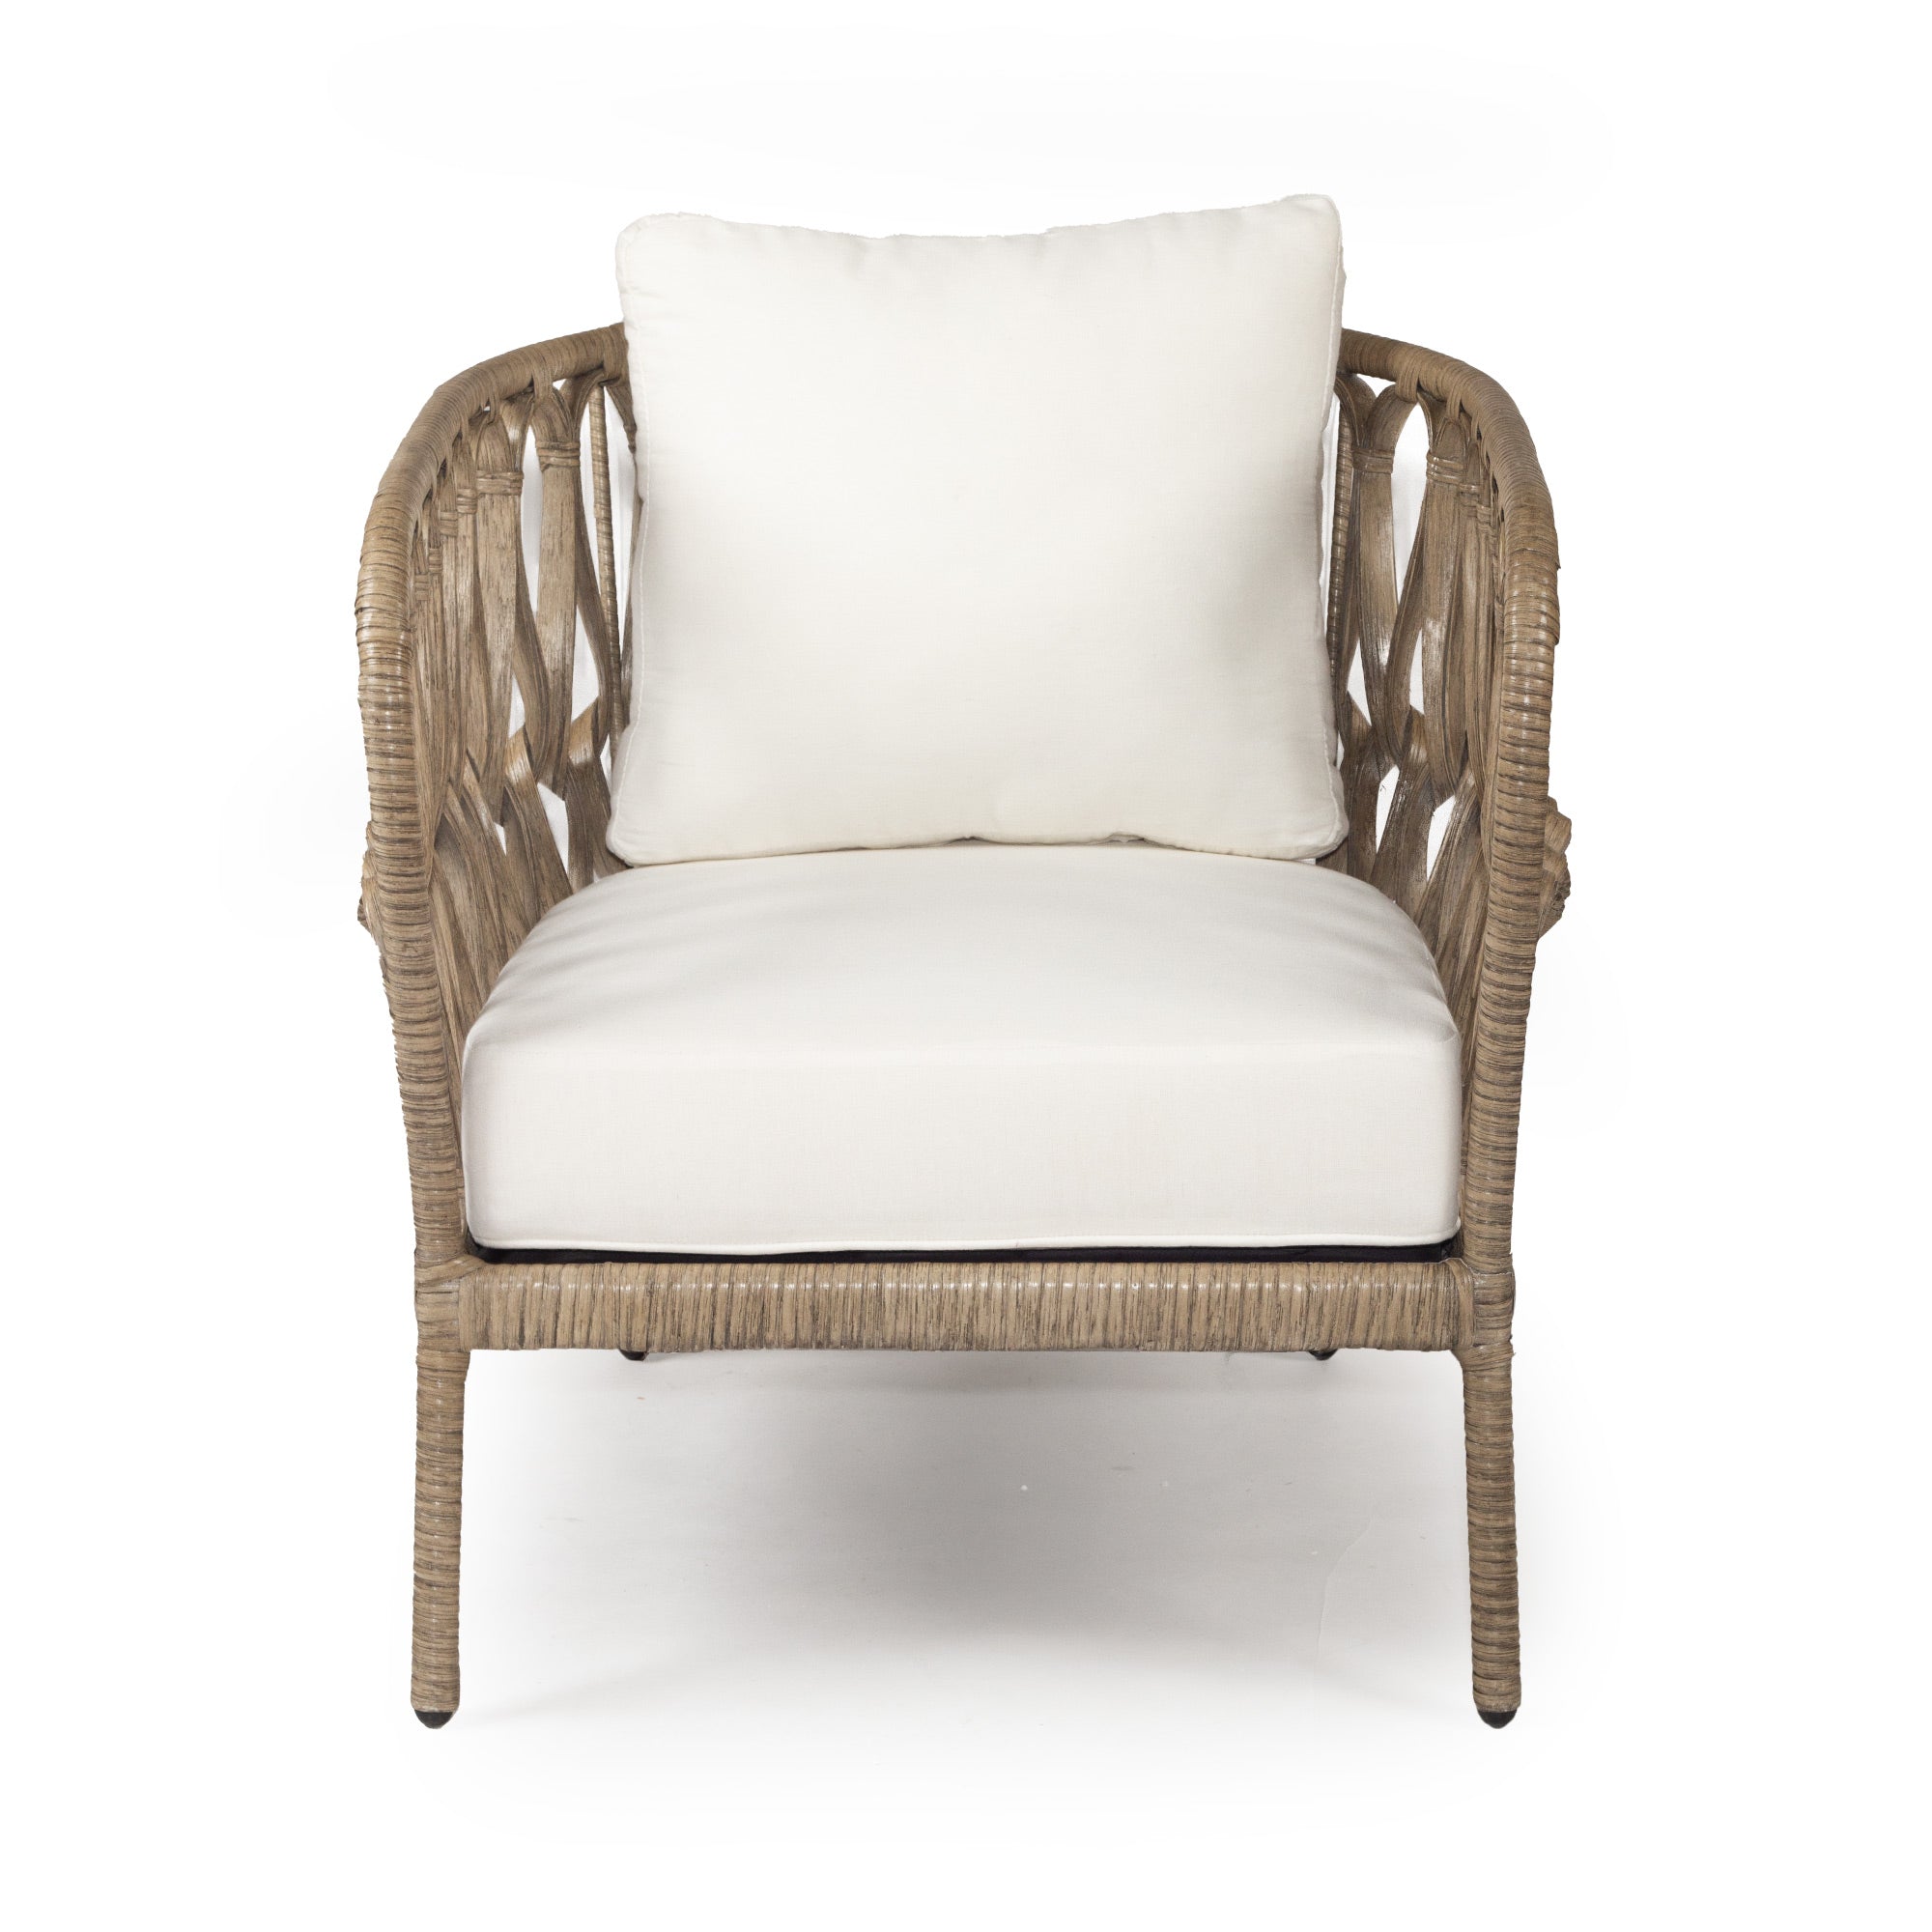 Cilla Rattan Lounge Tub Chair - Grey Wash - Notbrand